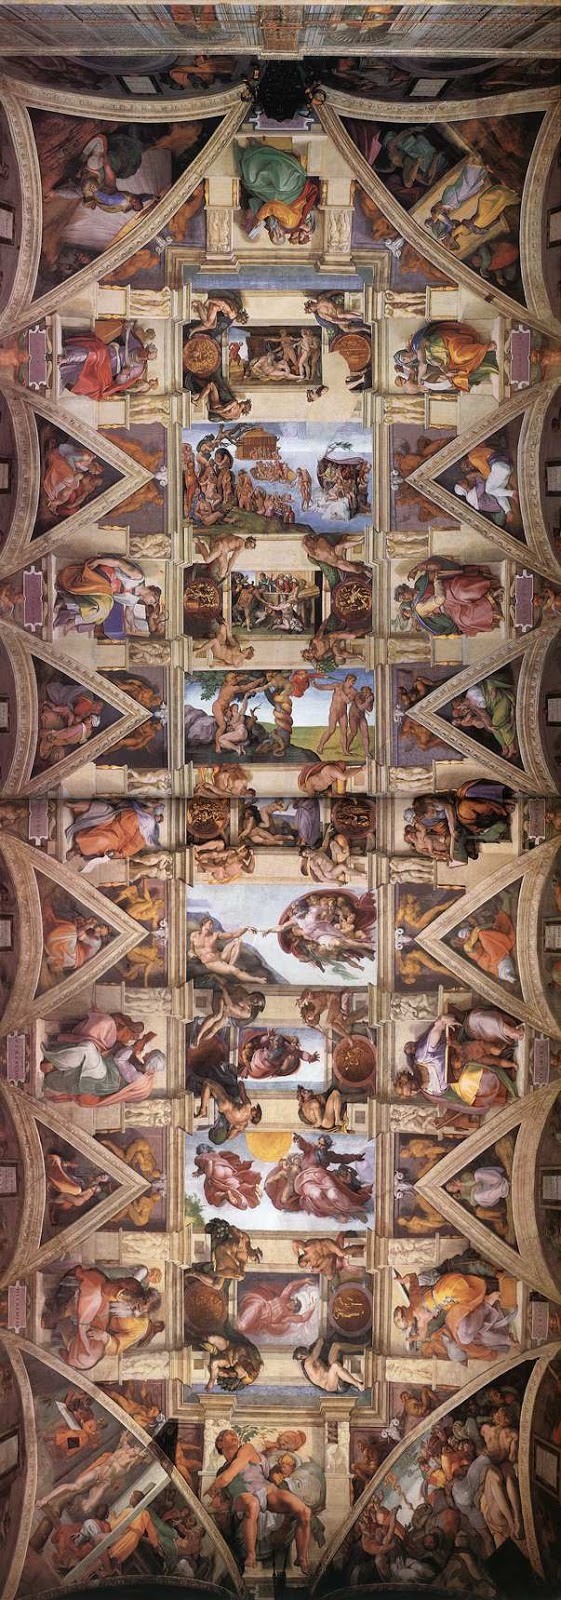 Michelangelo+Buonarroti-1475-1564 (17).jpg